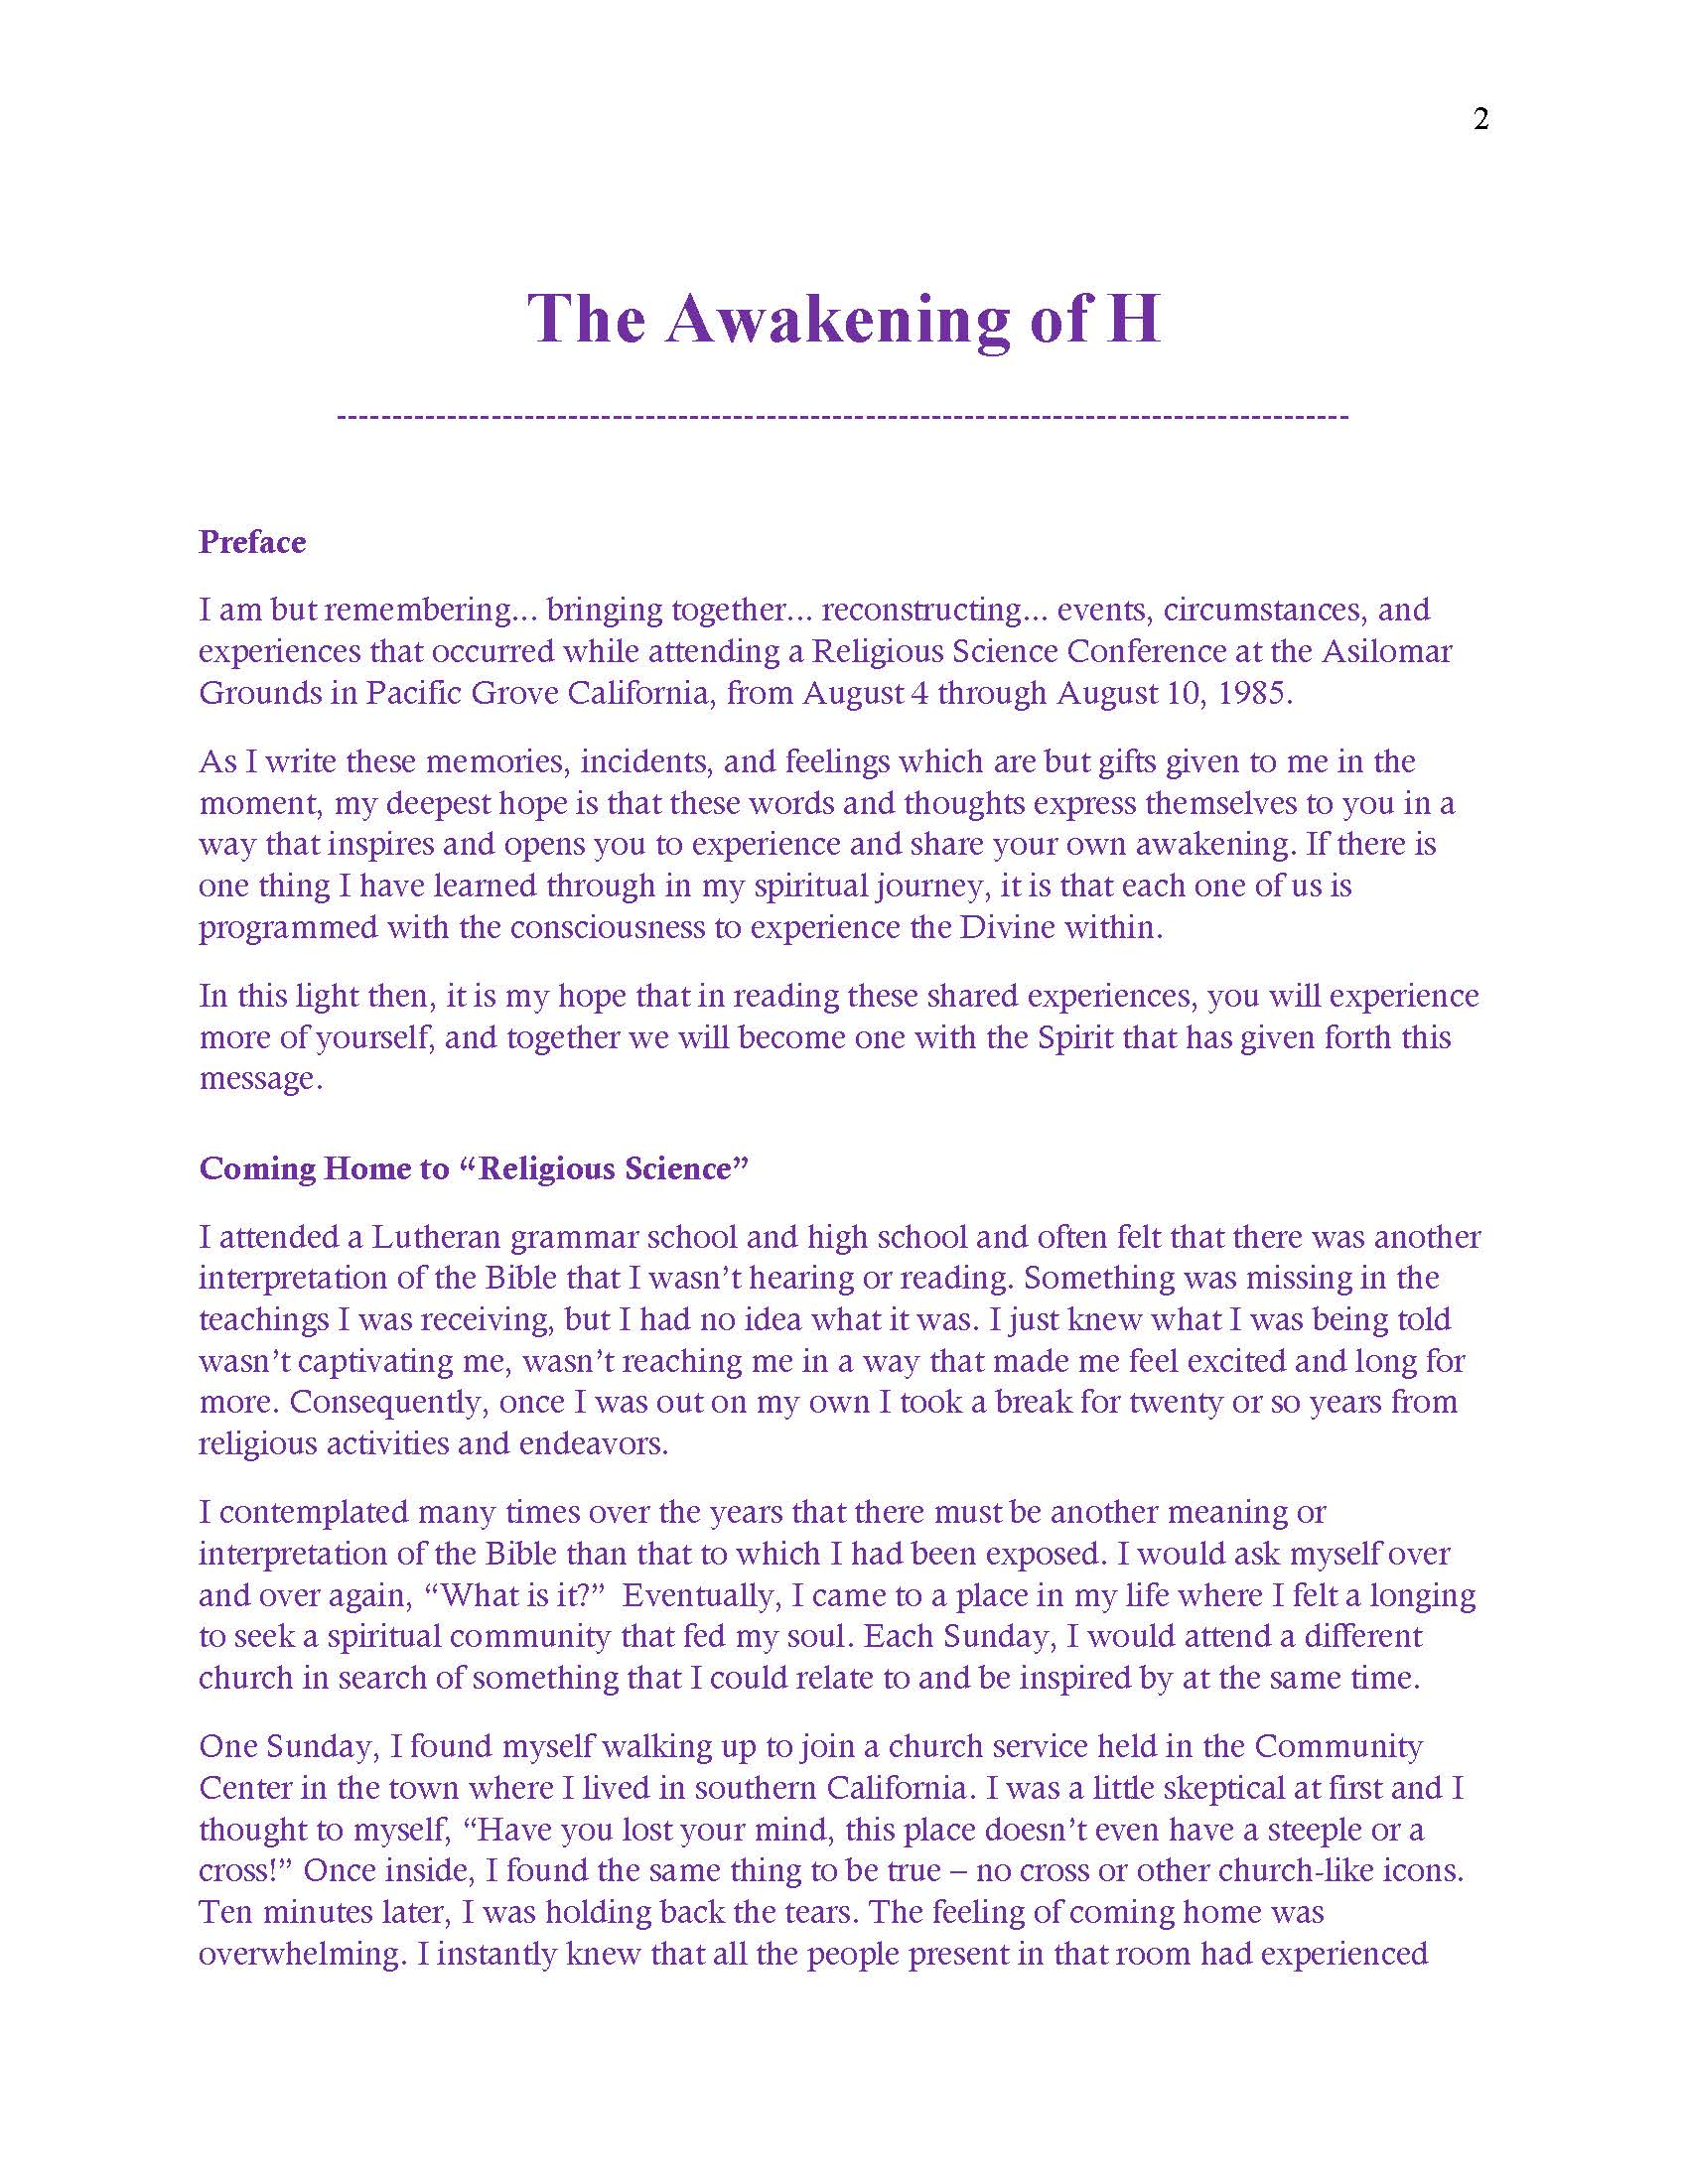 The Awakening of H by Ramanda